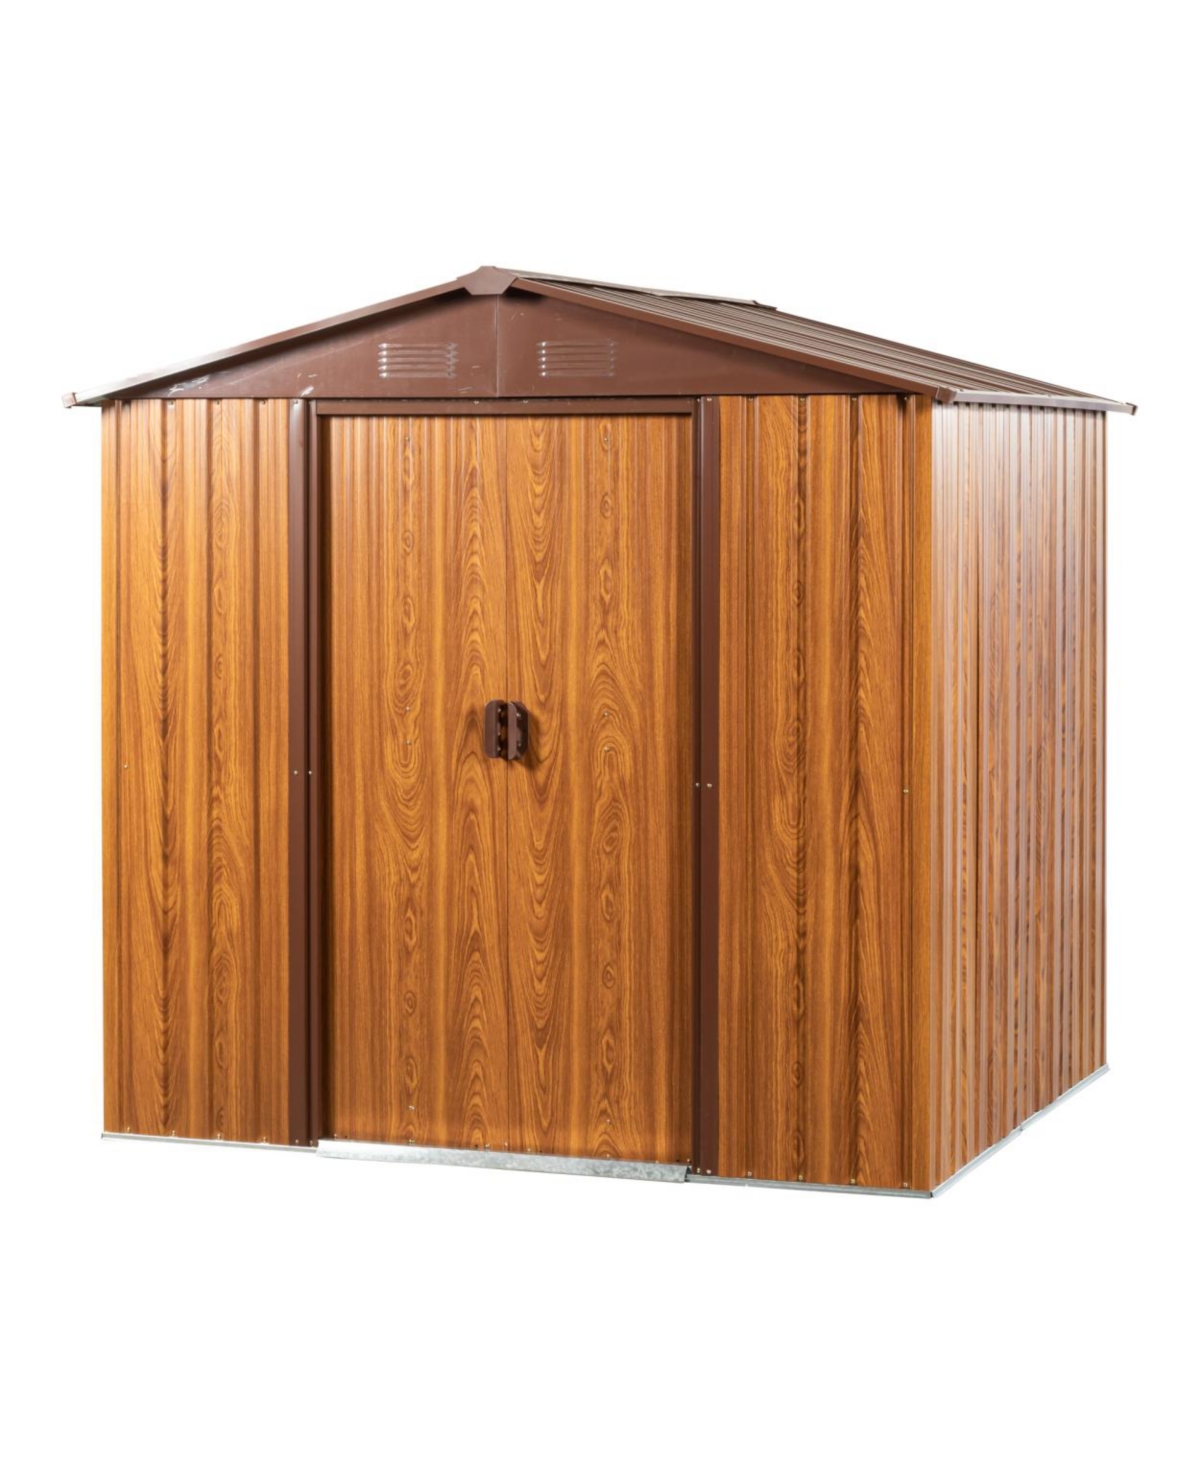 6x6 Metal Storage Shed with Wood Grain Horizontal Siding - Brown